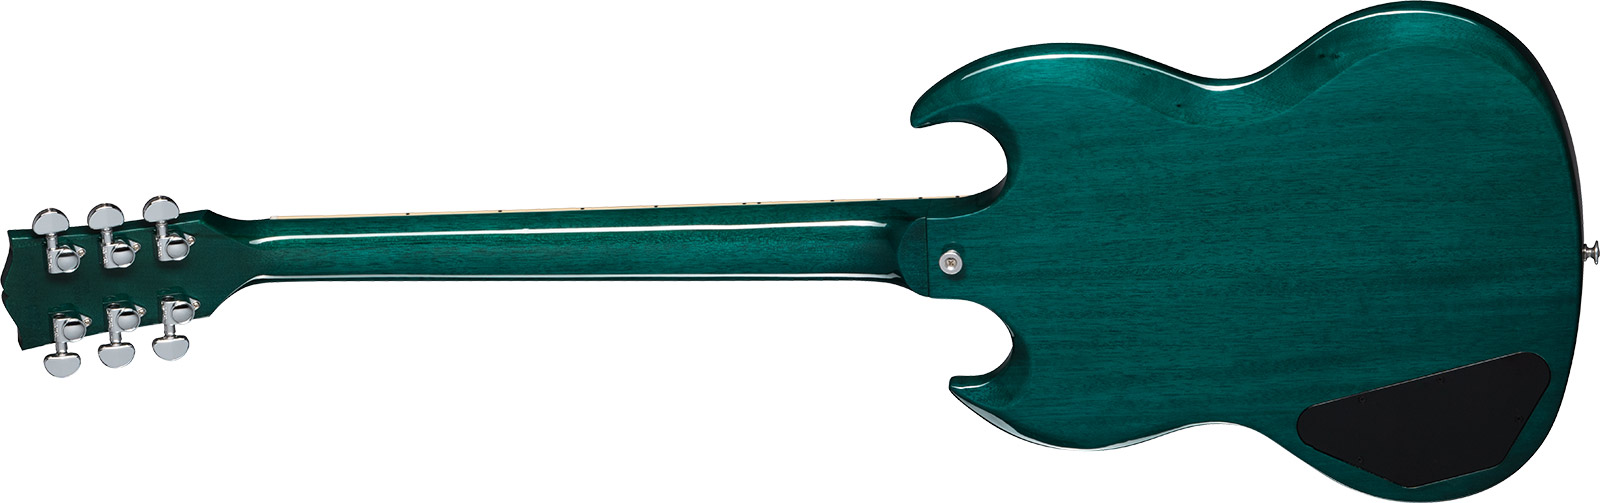 Gibson Sg Standard Custom Color 2h Ht Rw - Translucent Teal - Guitare Électrique Double Cut - Variation 1